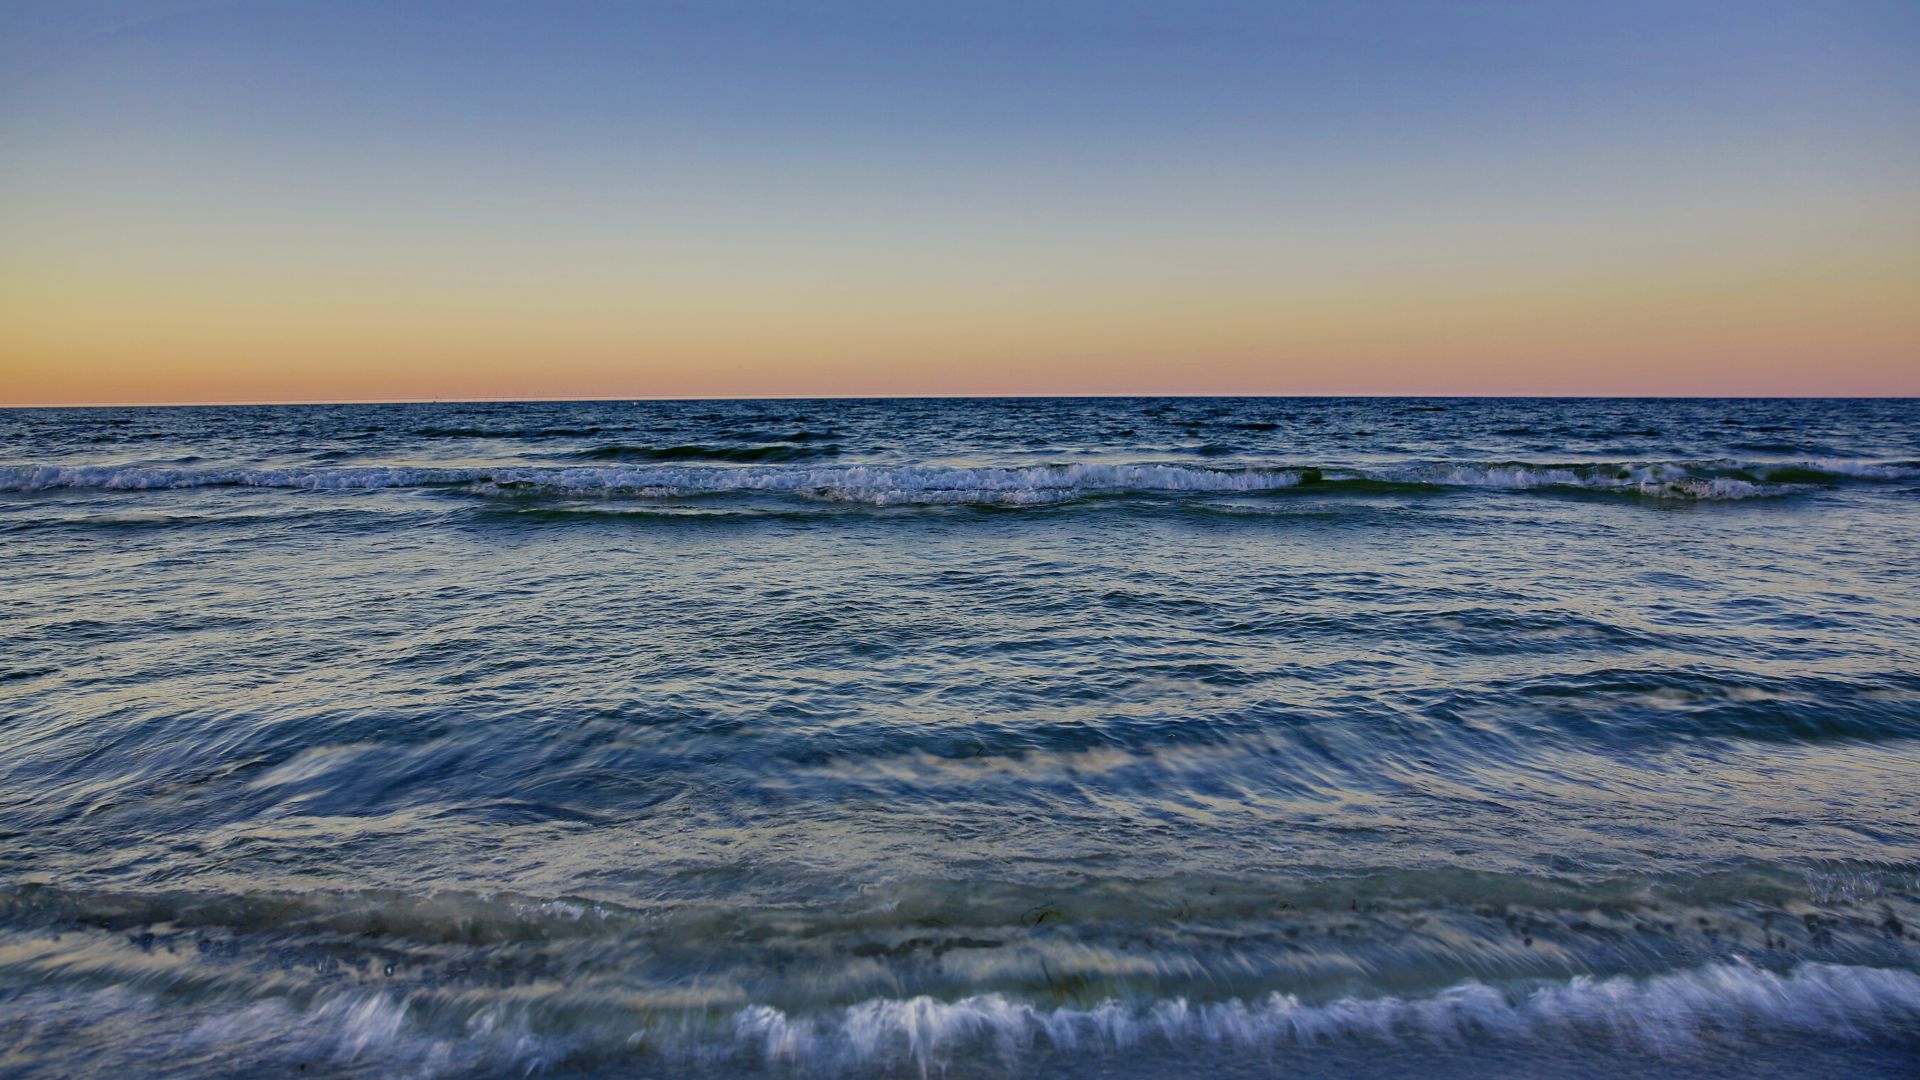 Baltic Sea, 4k, 5k wallpaper, 8k, Ostsee, sunset, waves (horizontal)